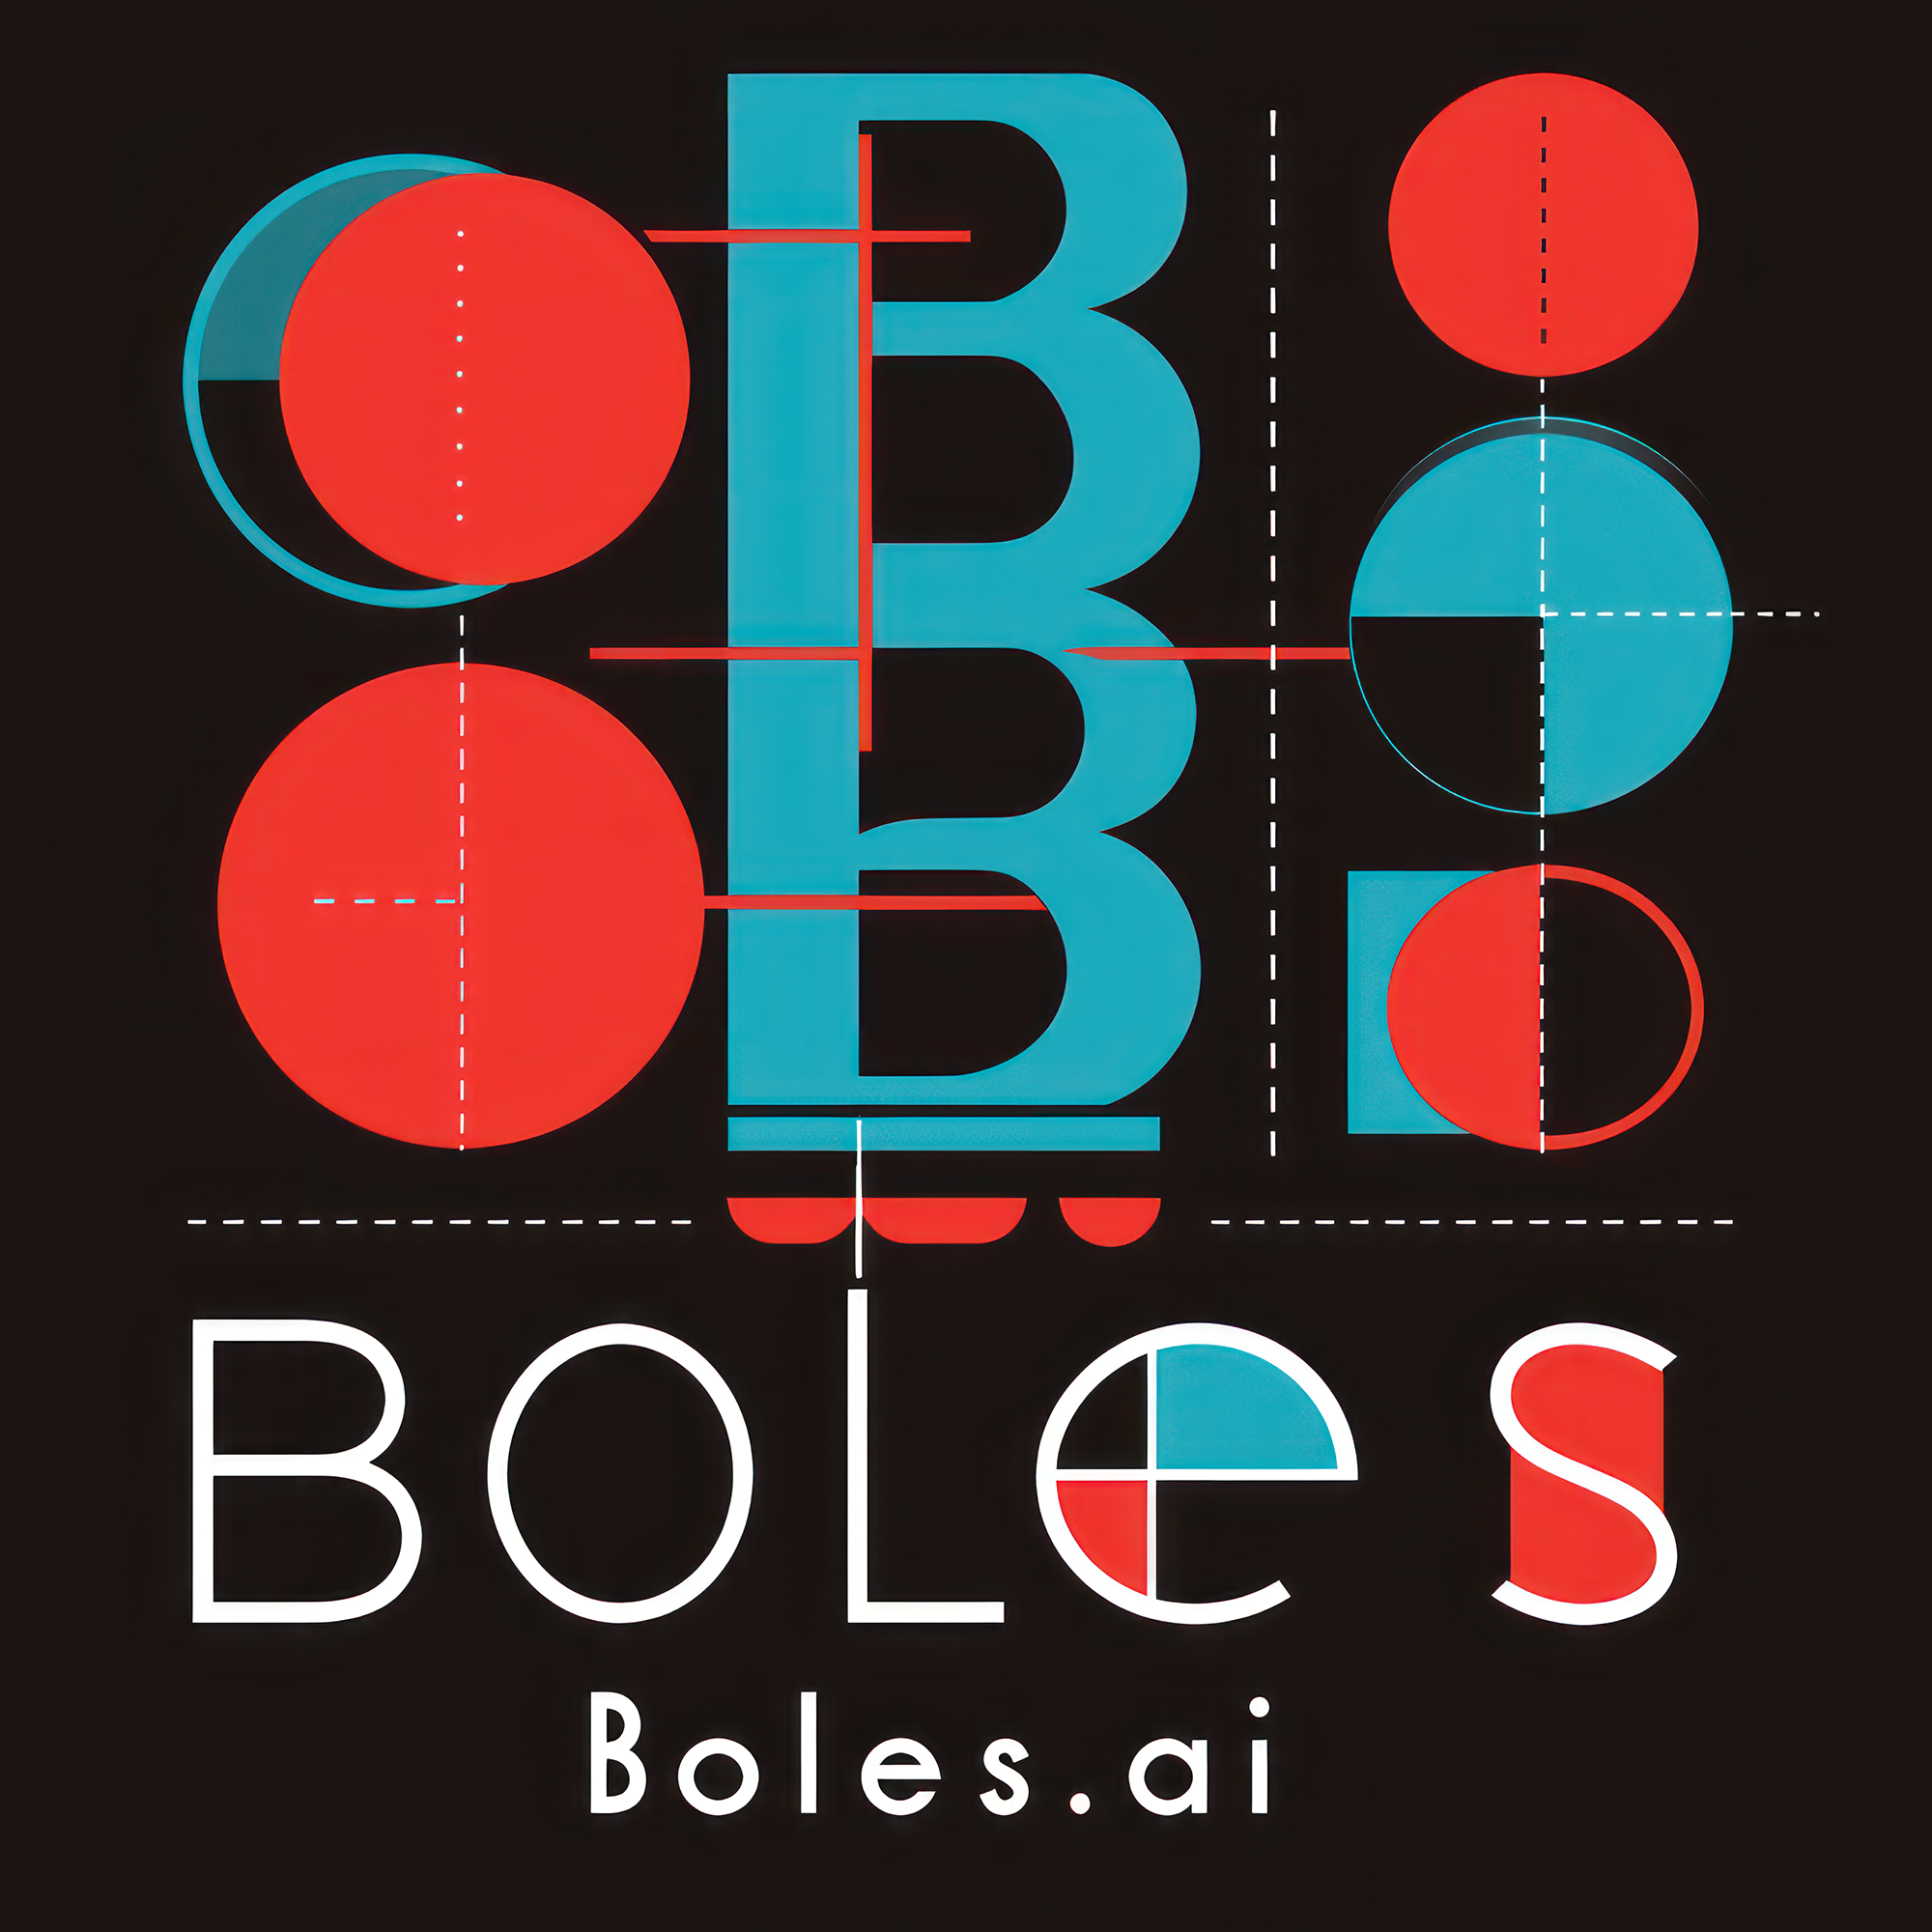 Neon Boles.ai Teal Logo!